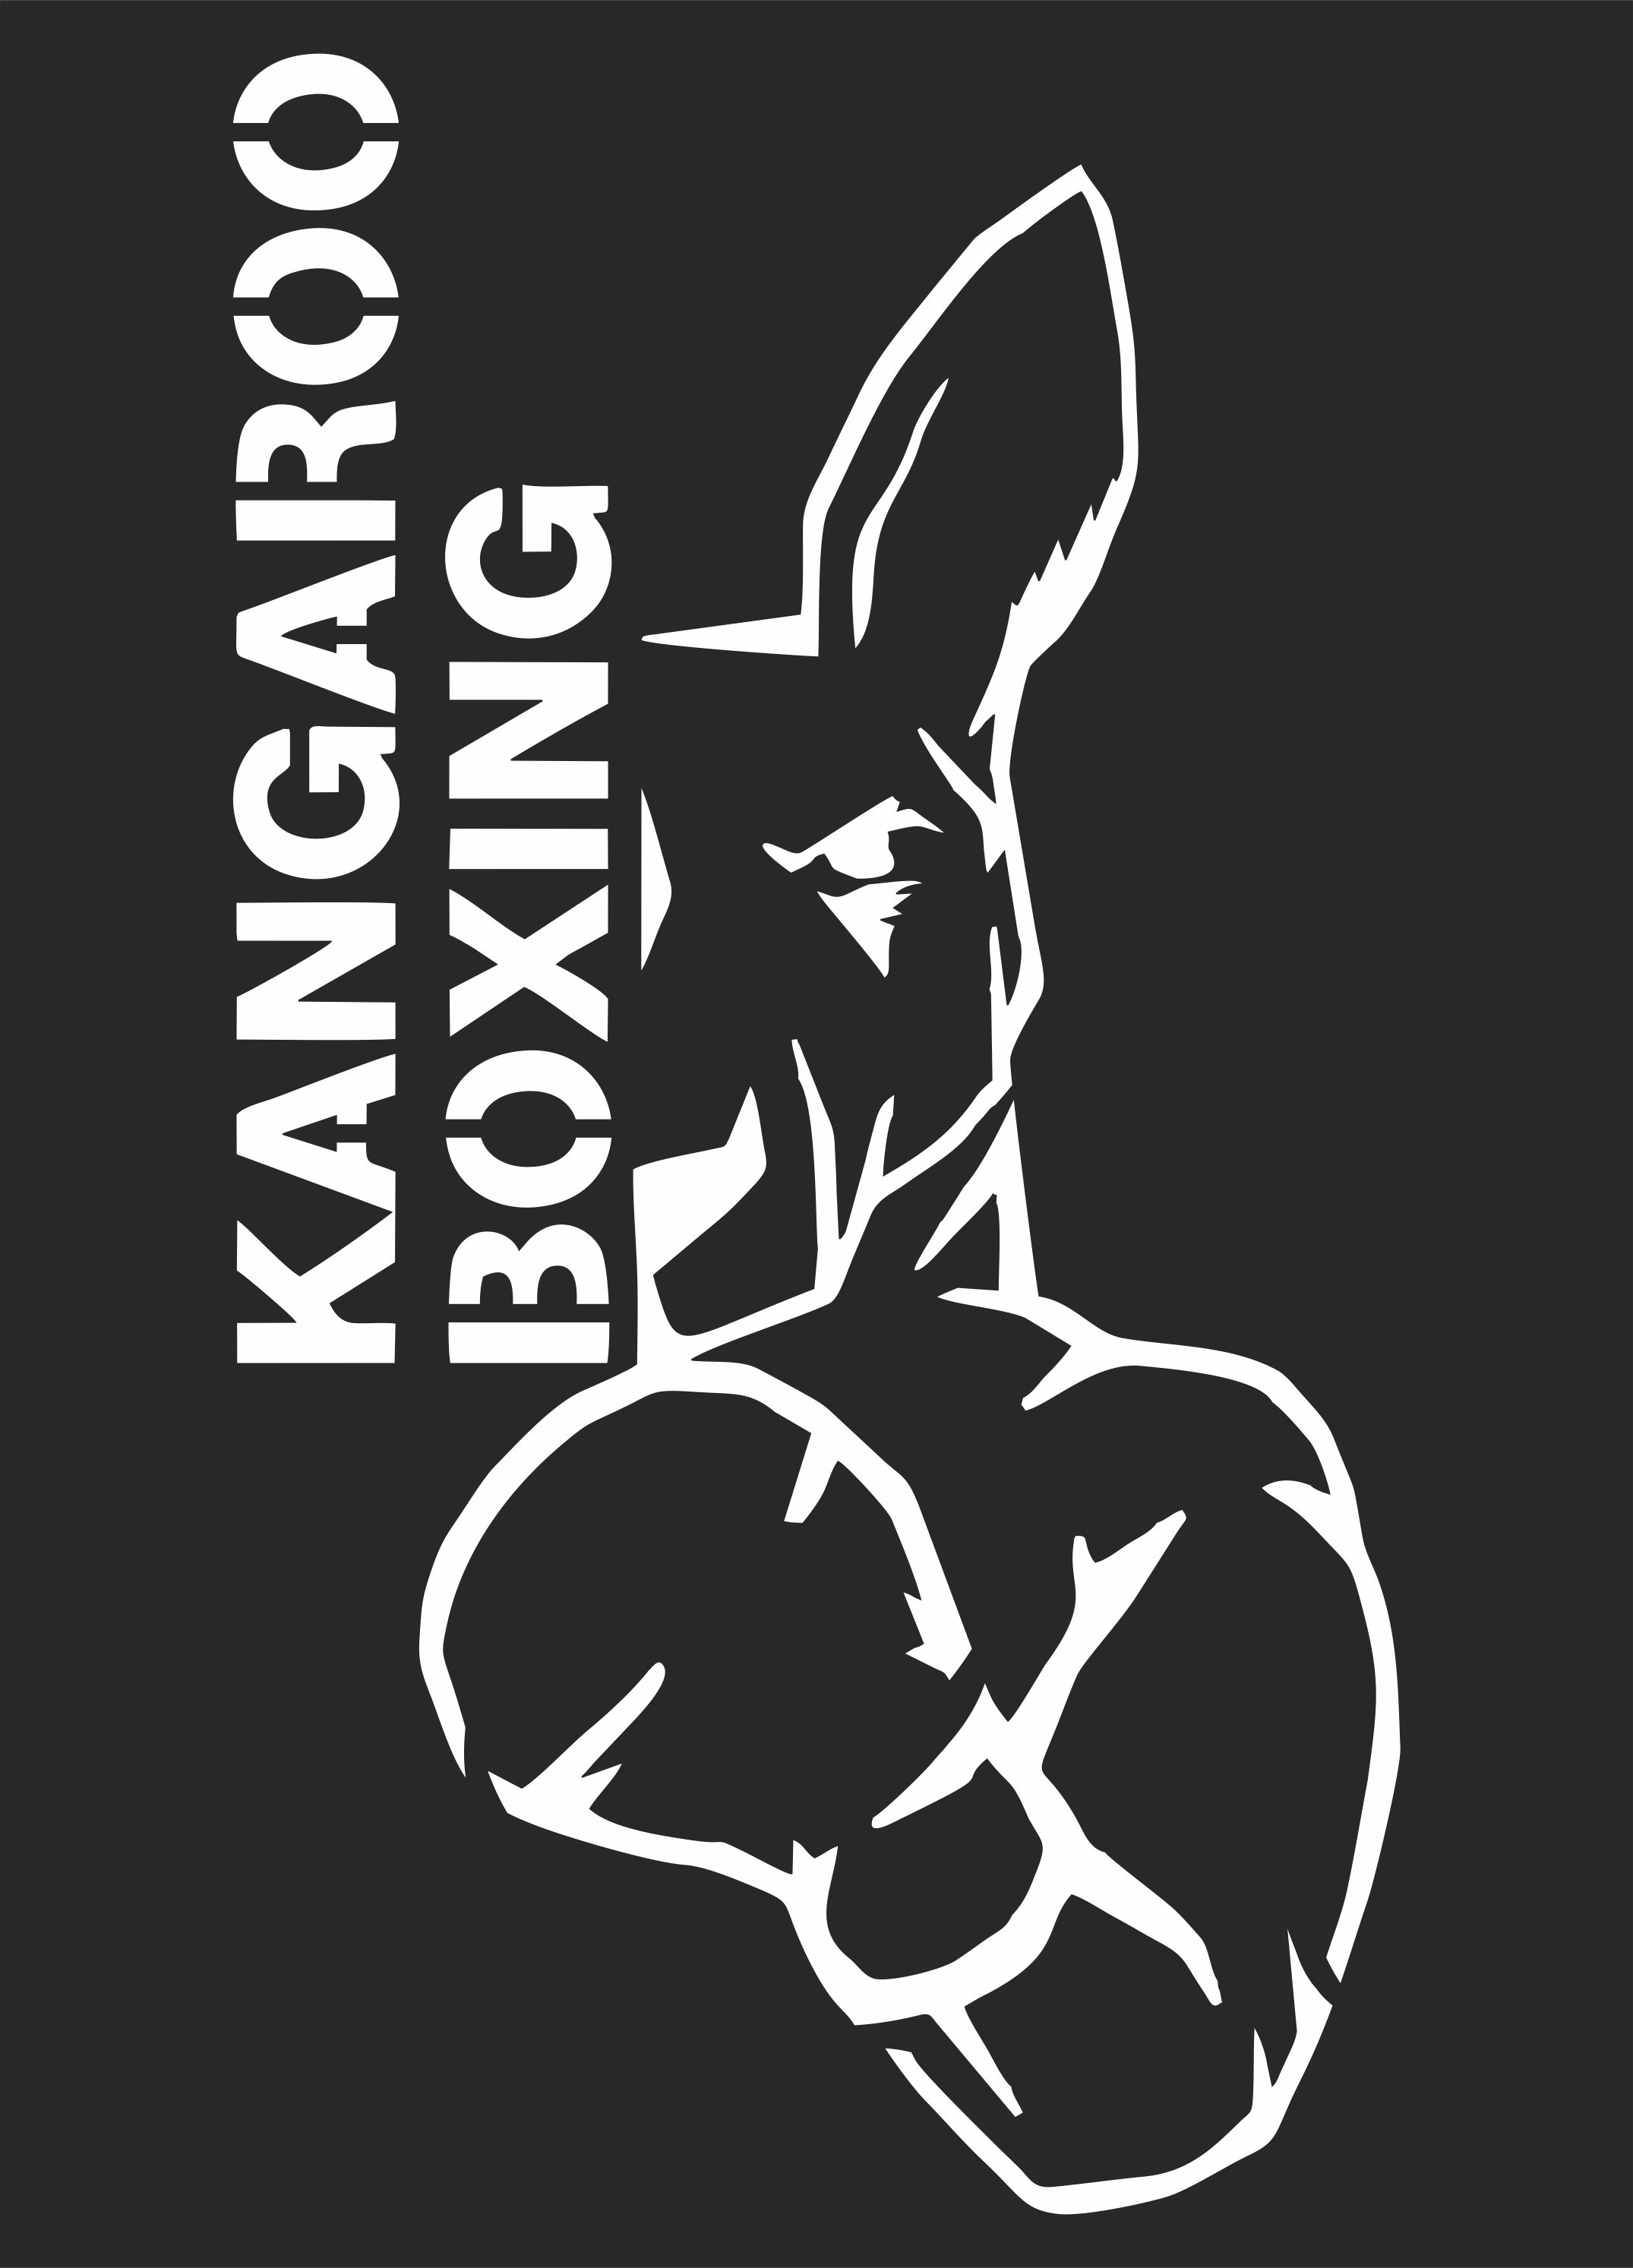 Kangaroo boxing wall art - For Laser Cut DXF CDR SVG Files - free ...